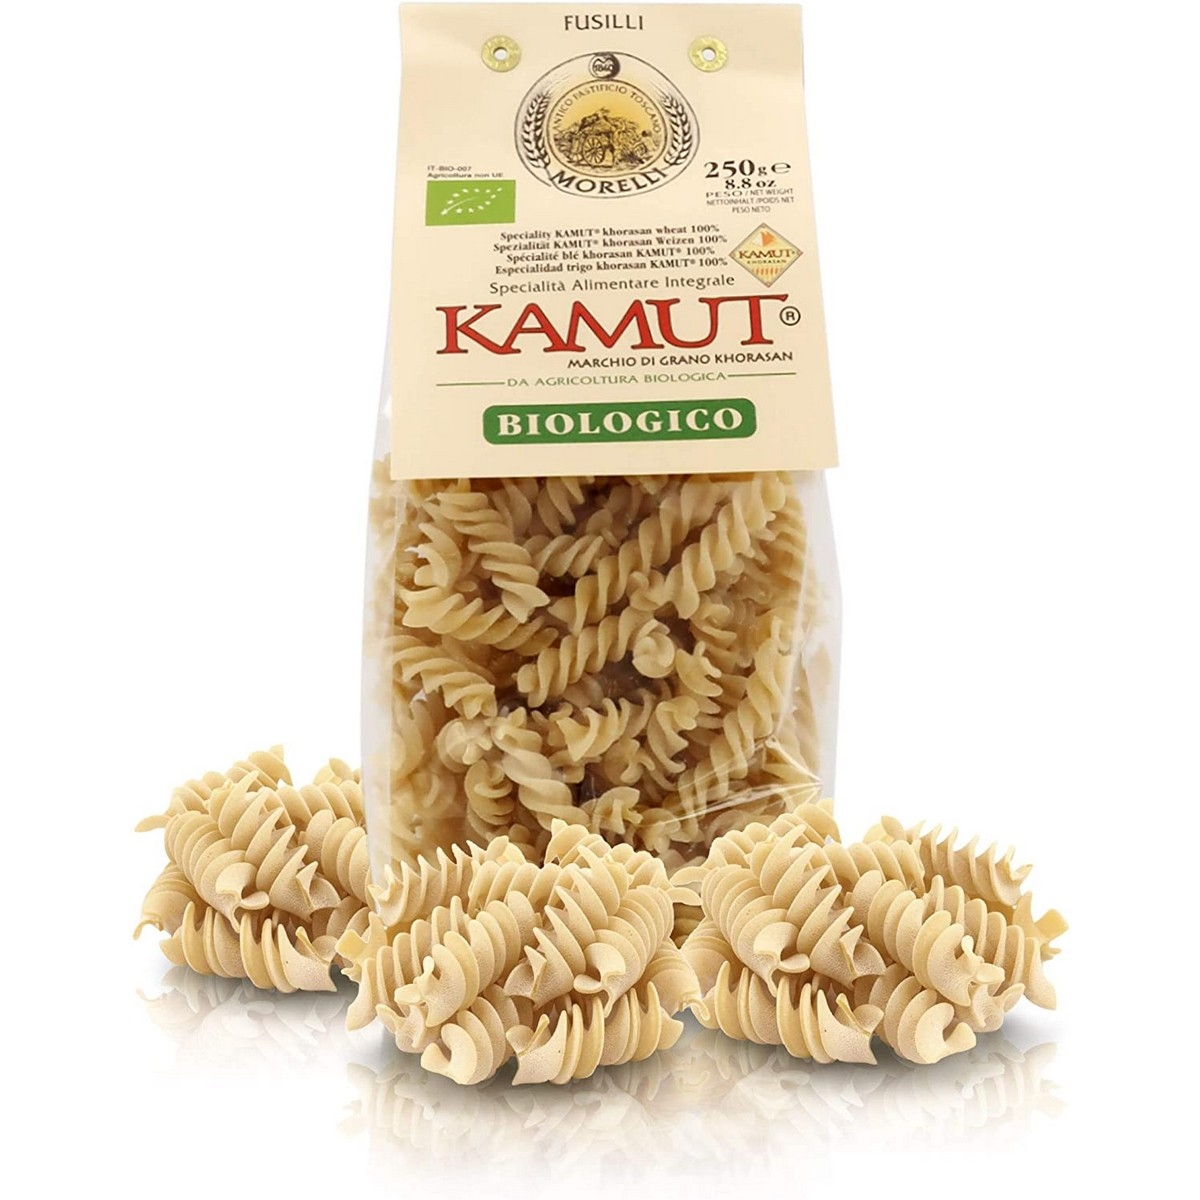 Antico Pastificio Morelli - Cereal Pasta - Kamut - Fusilli Bio - 250 g